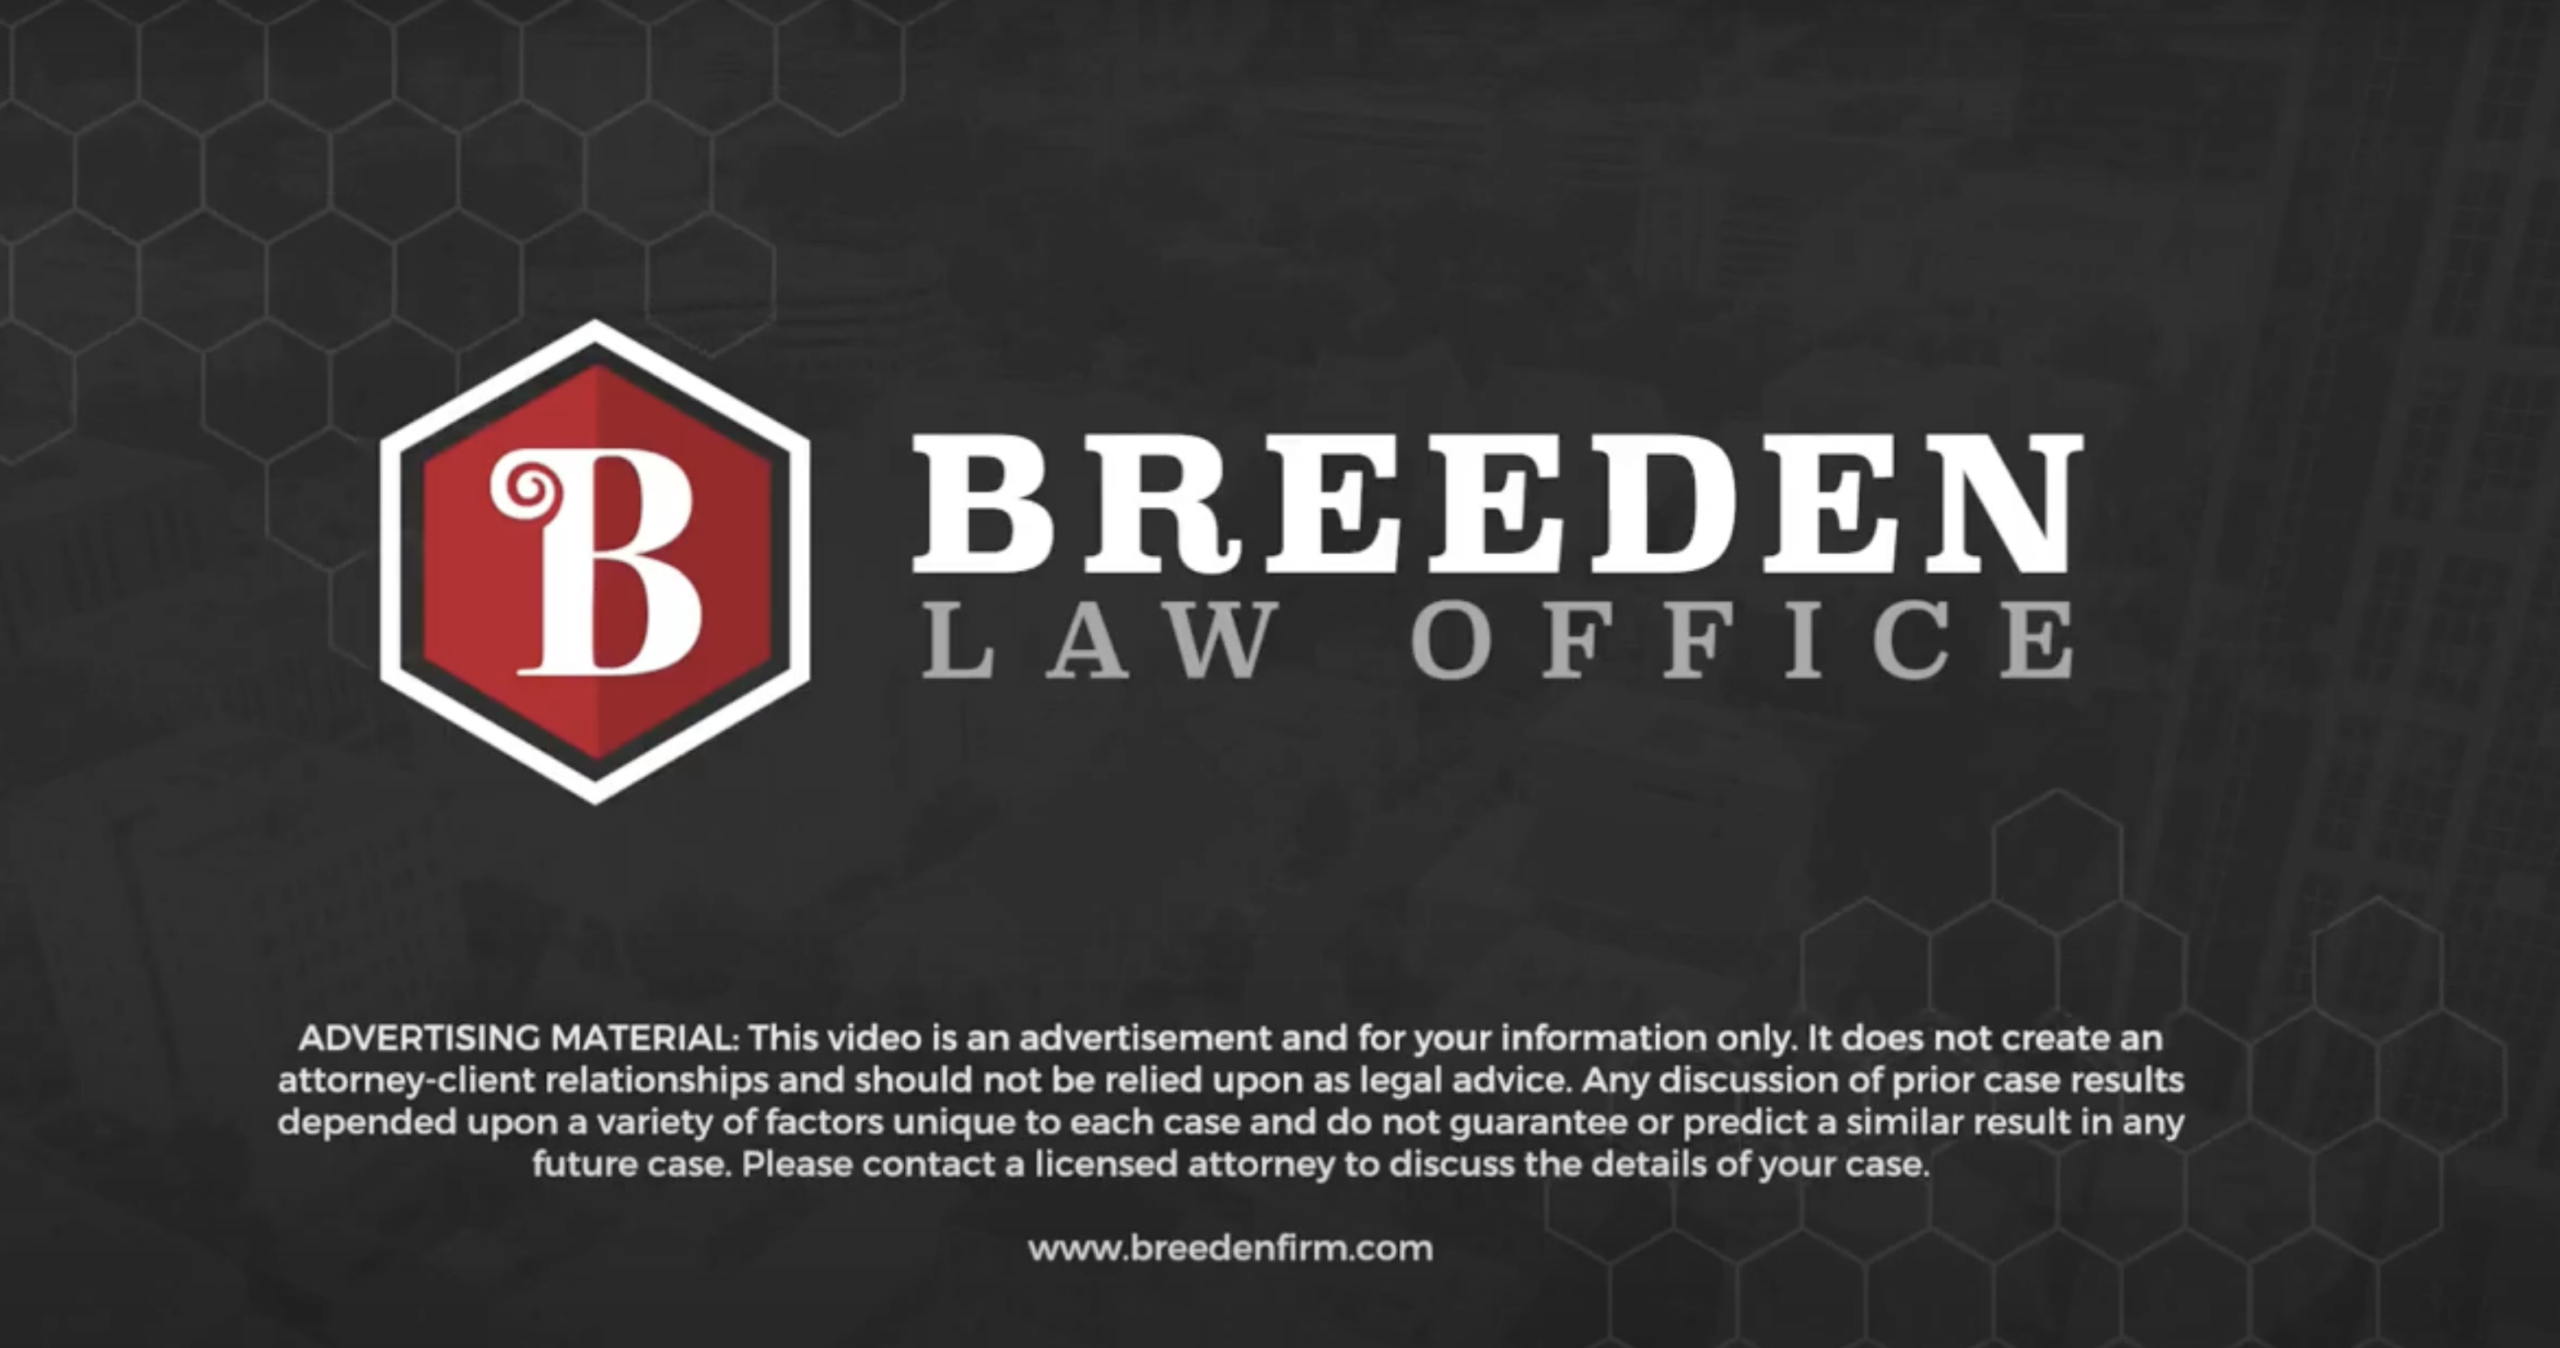 Video title card: Breeden Law Office